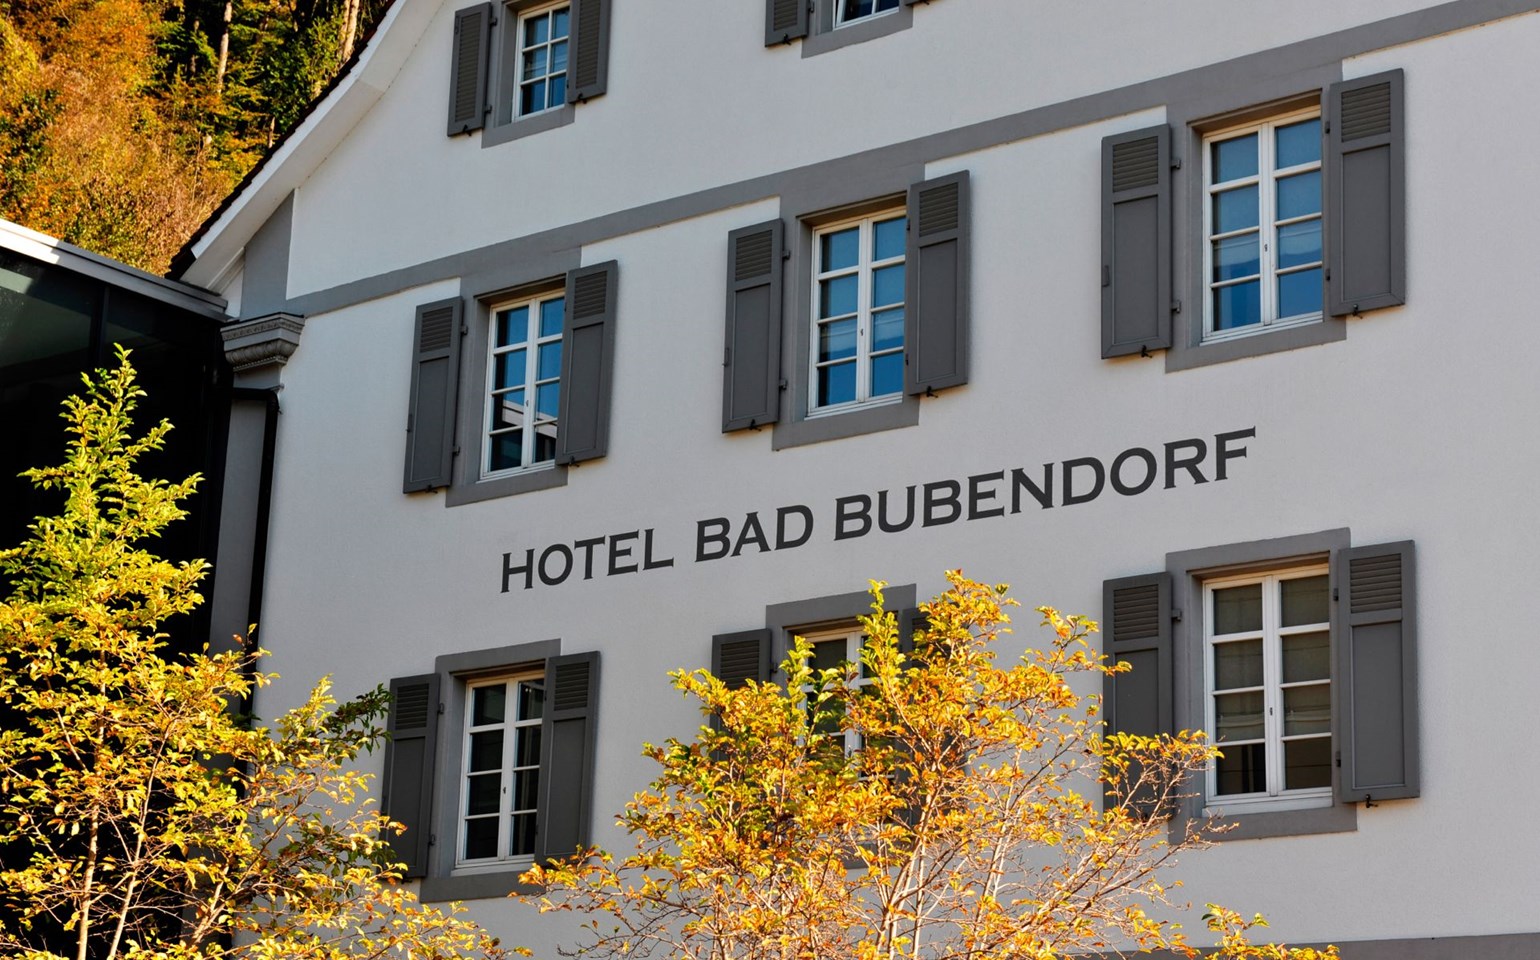 Bad Bubendorf Hotel, Bad Bubendorf